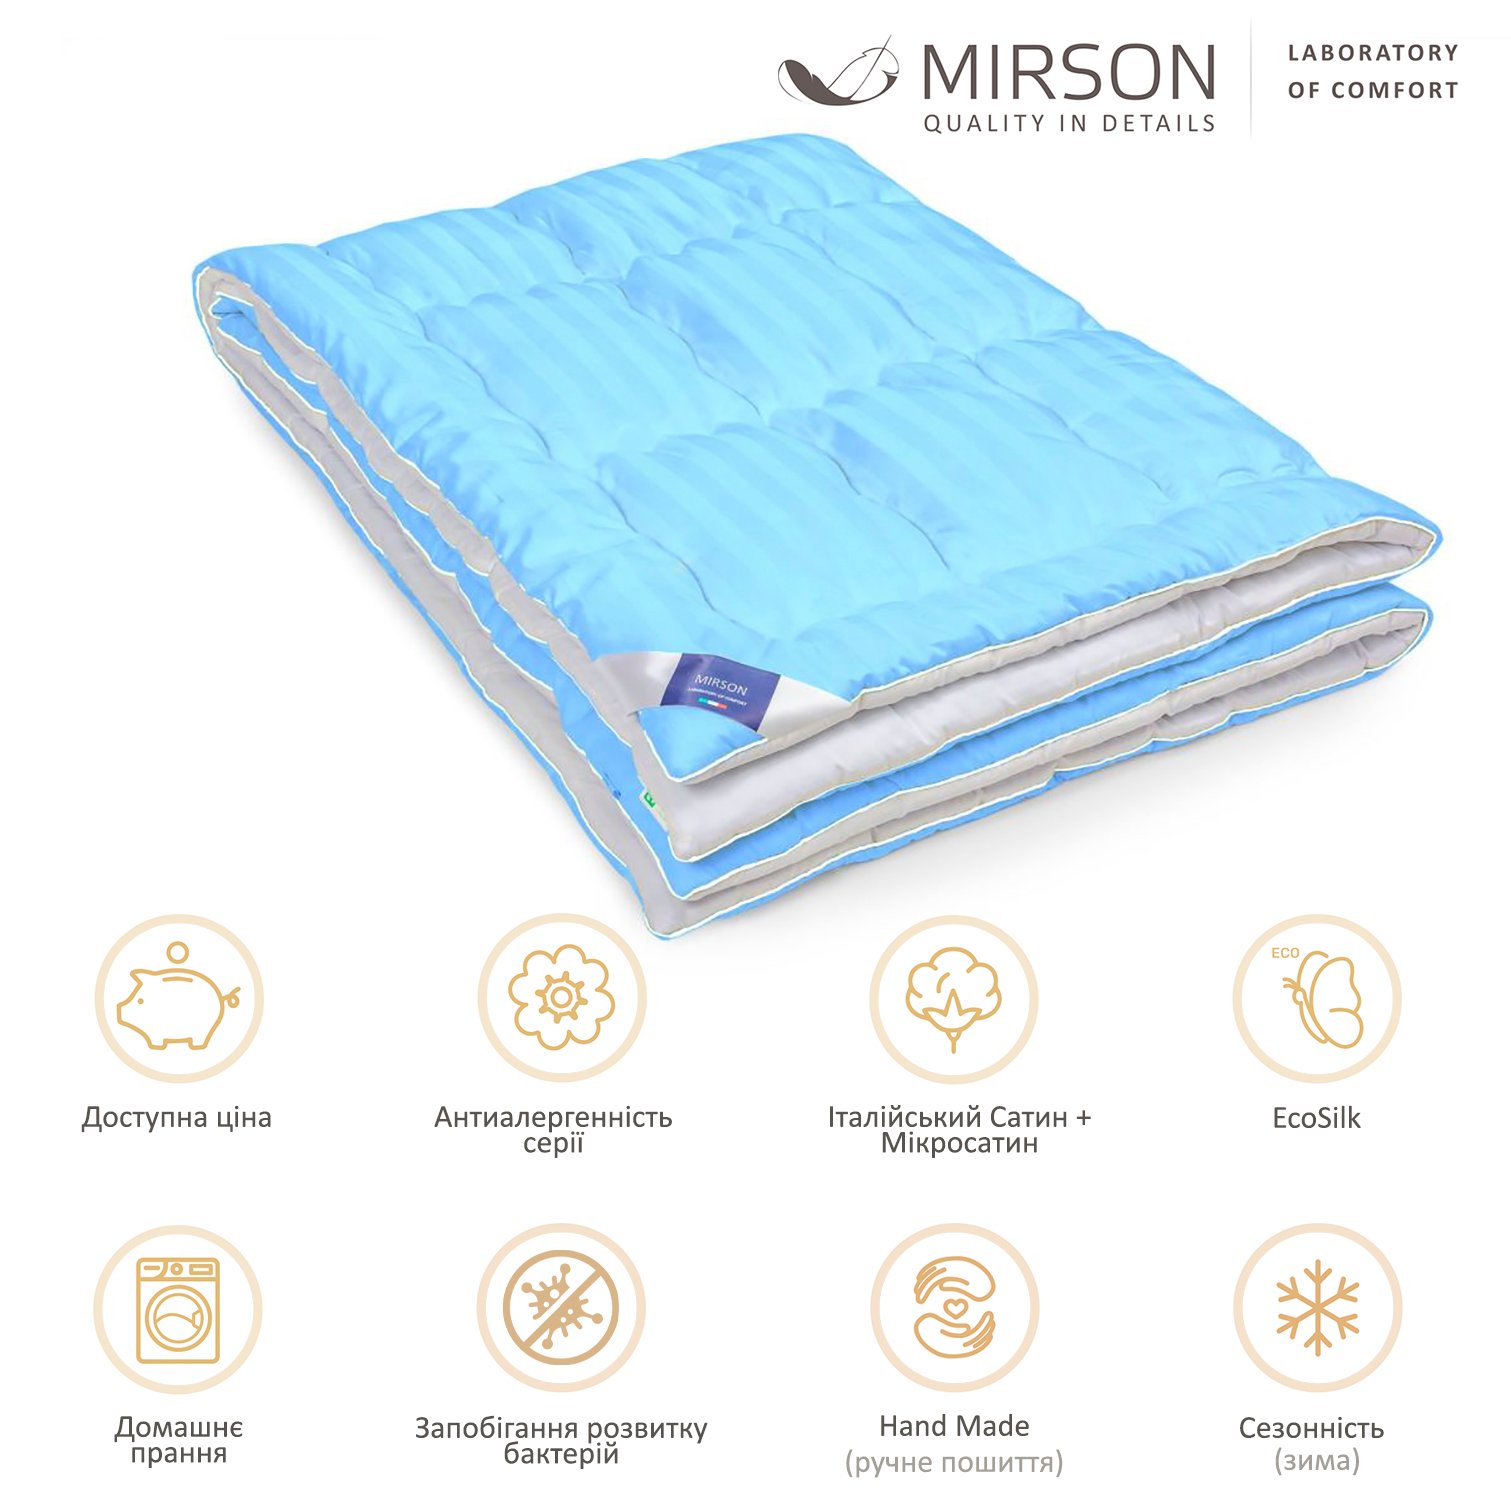 Одеяло антиаллергенное MirSon Valentino Hand Made EcoSilk №0554, зимнее, 220x240 см, бело-голубое (14212340) - фото 5